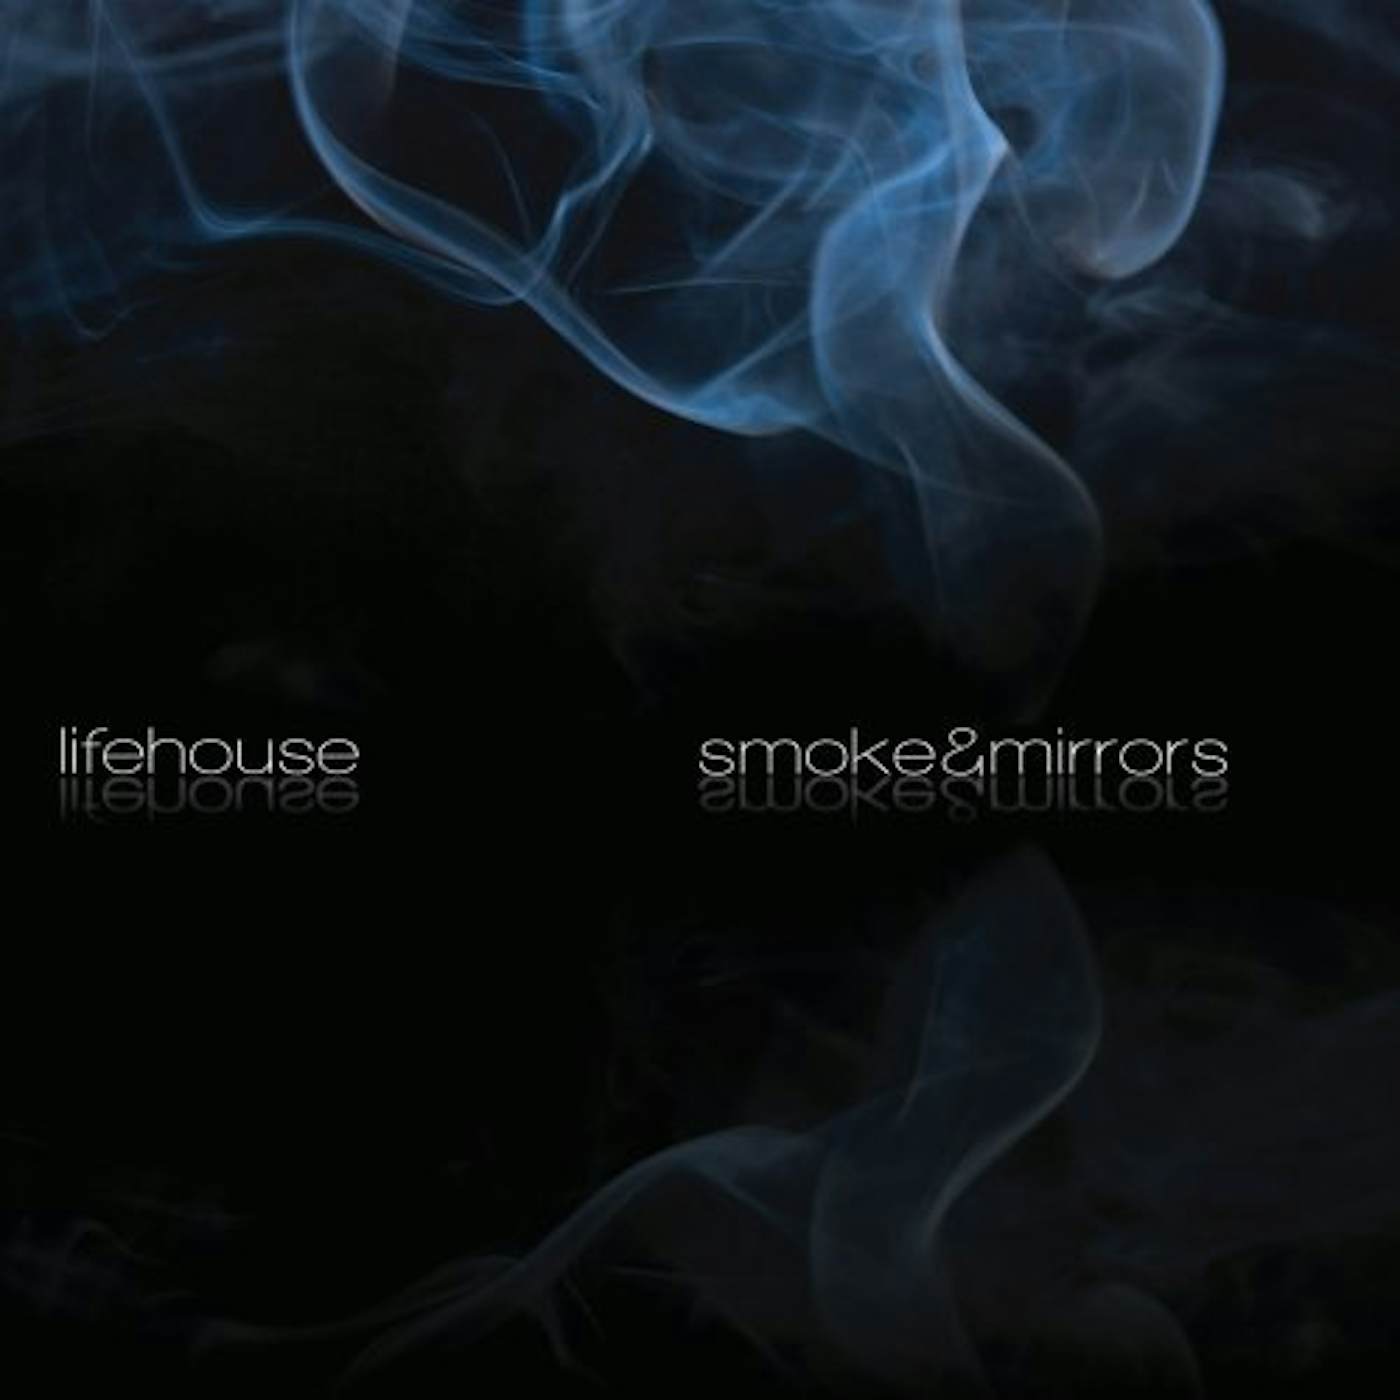 Lifehouse SMOKE & MIRRORS CD